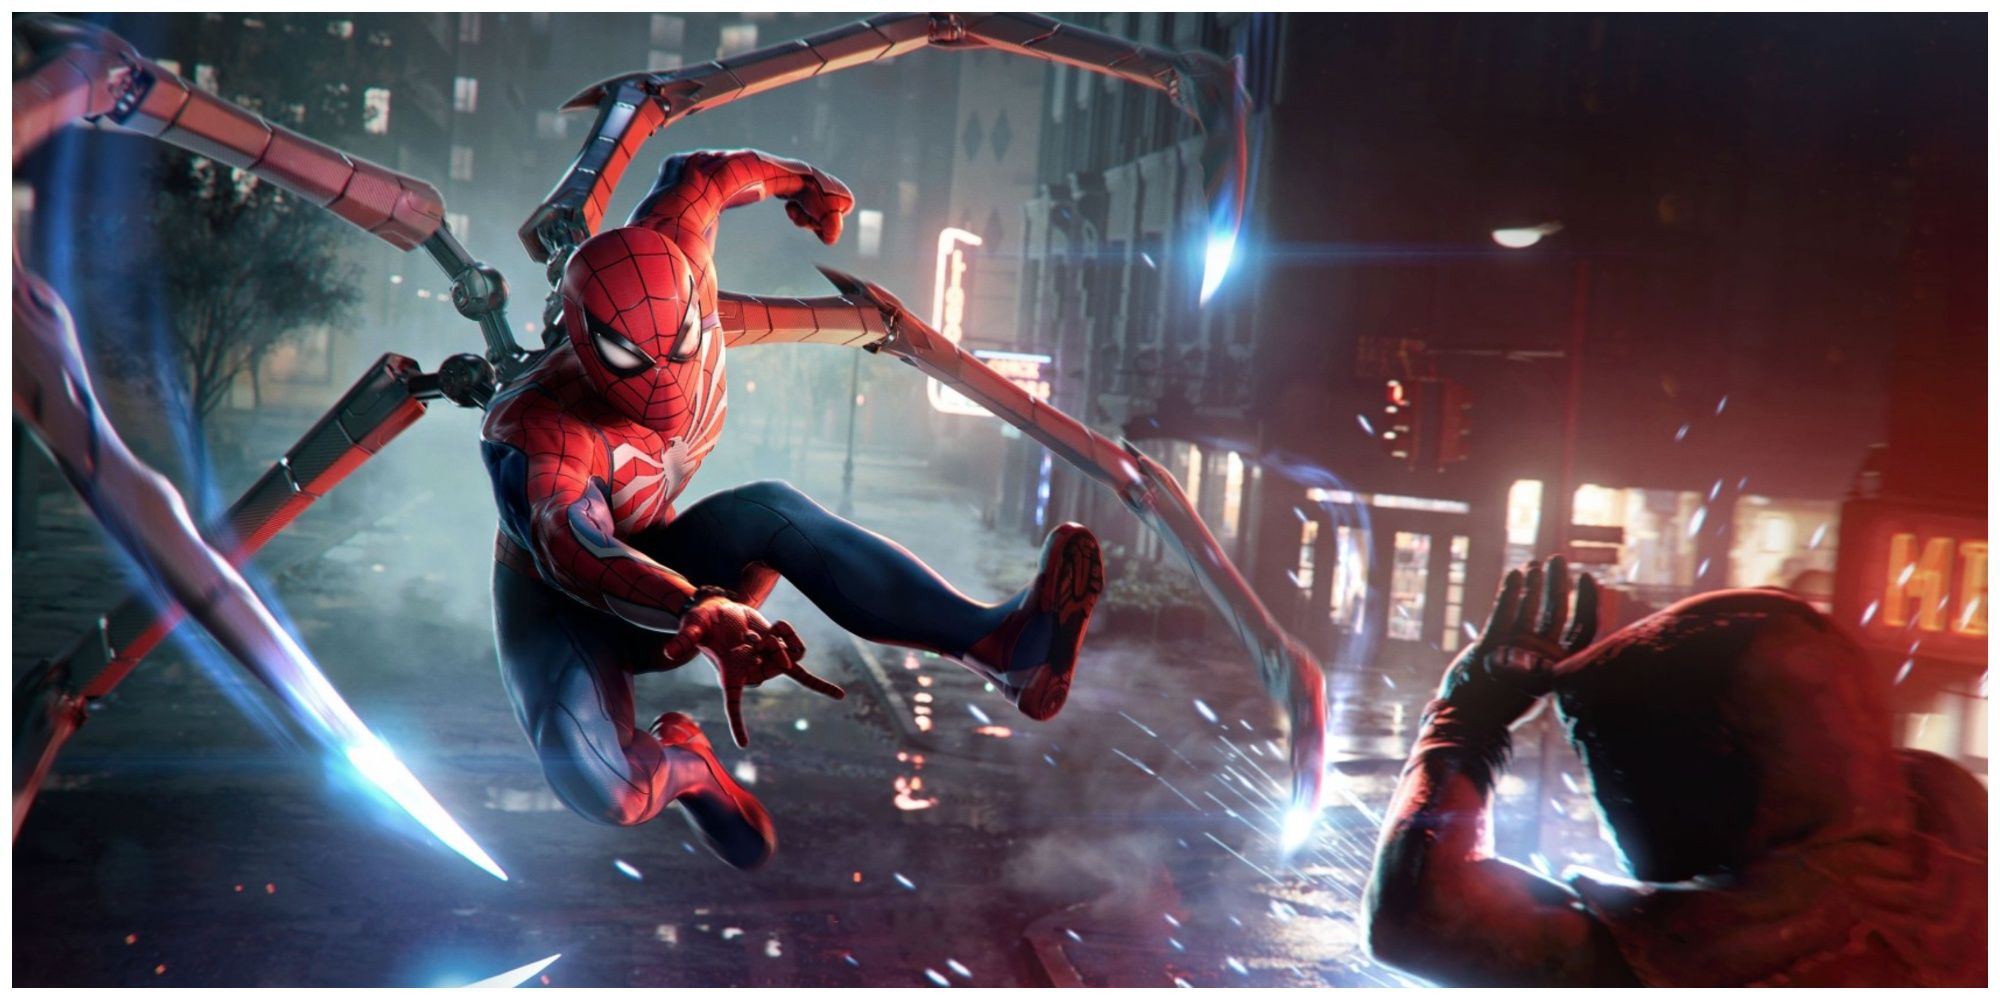 Spider-Man 2 peter shooting webs at bad guy